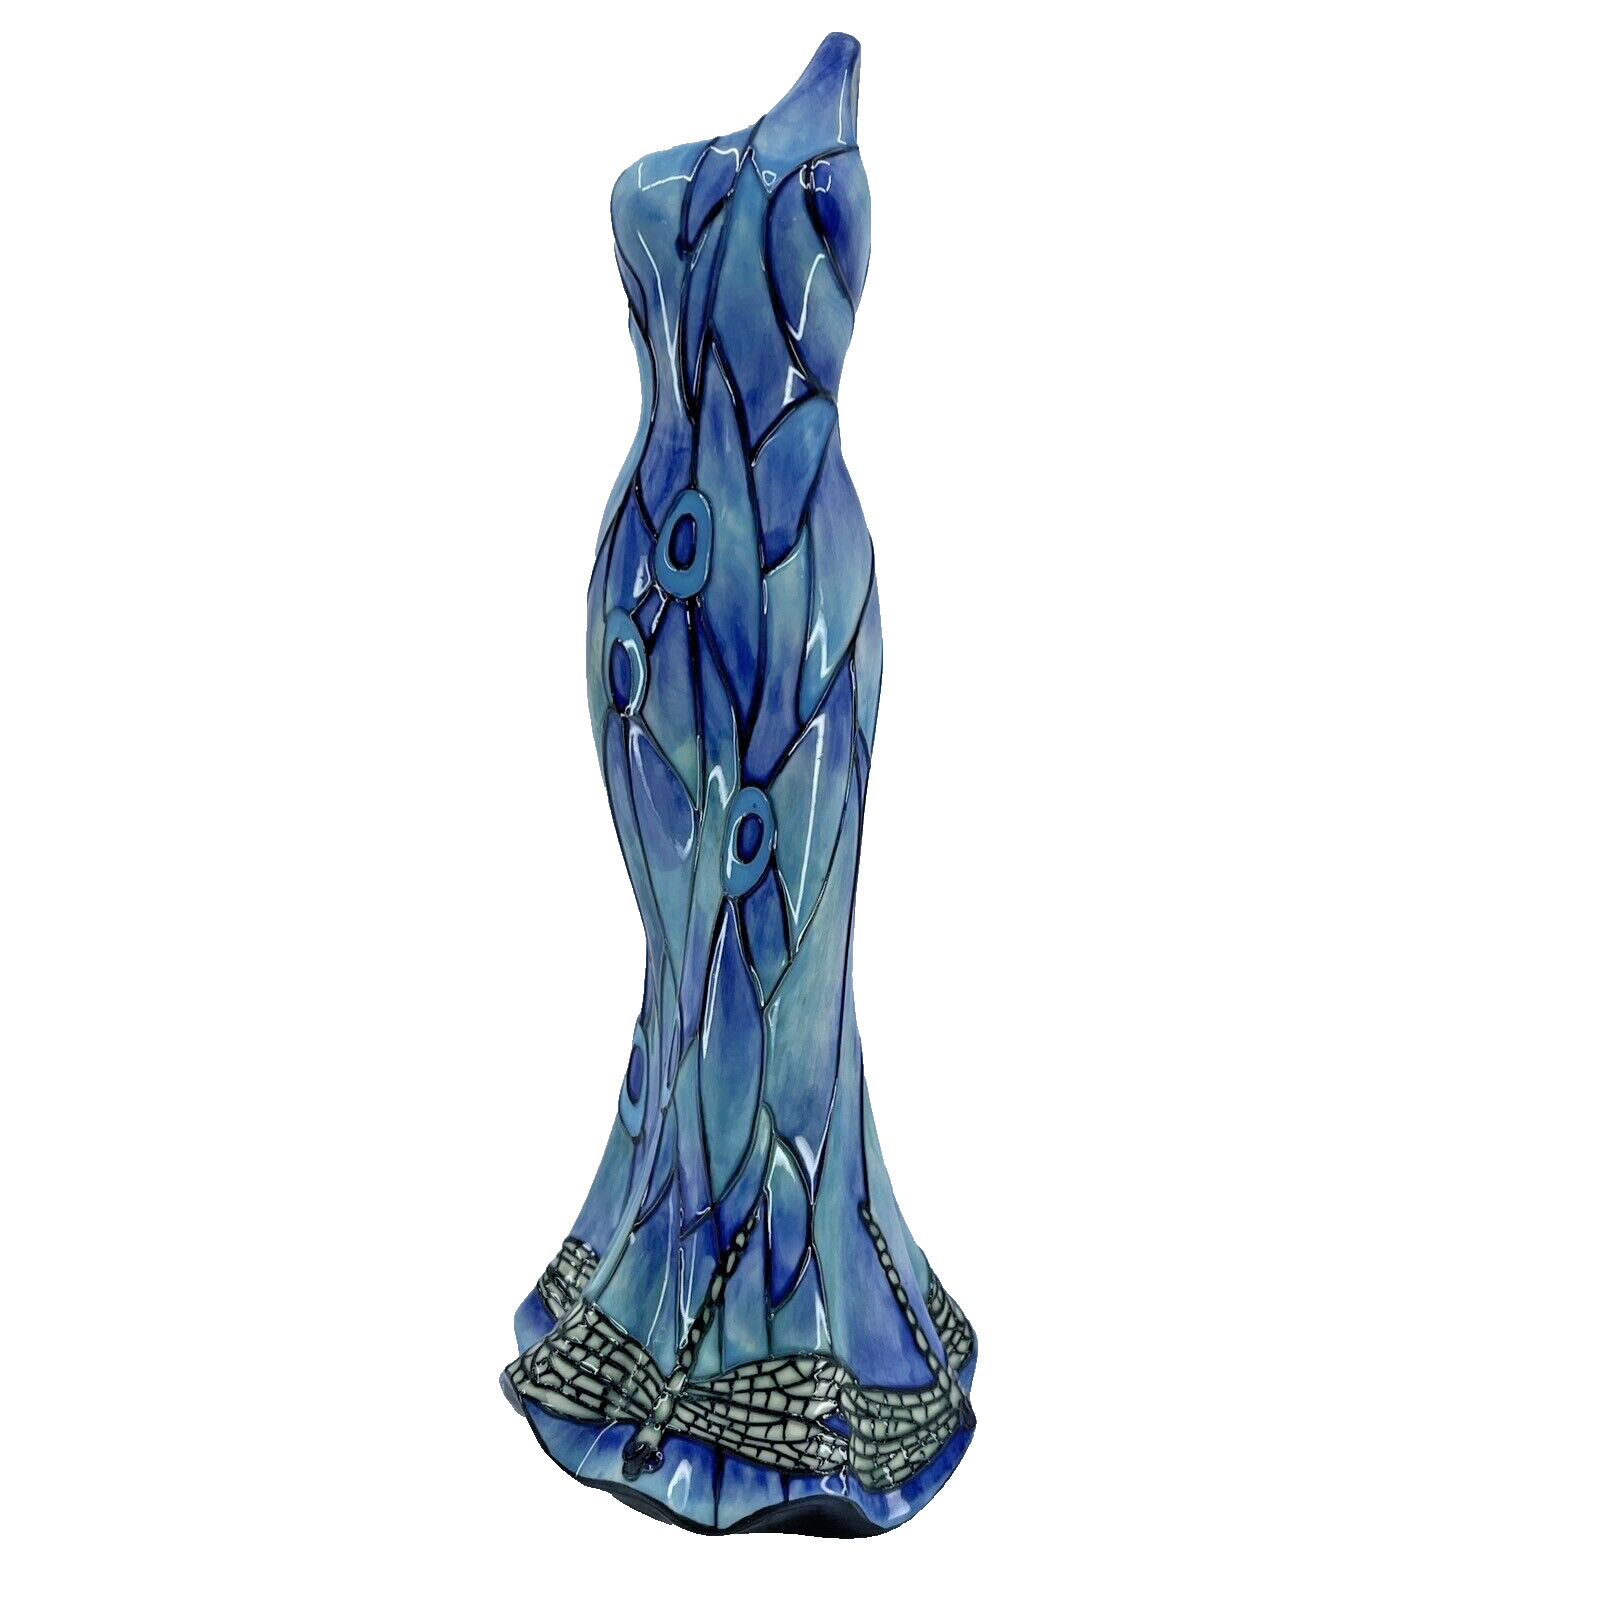 Benaya By Innovation Beautiful Dress Vase with Dragonfly Pattern in Original Box